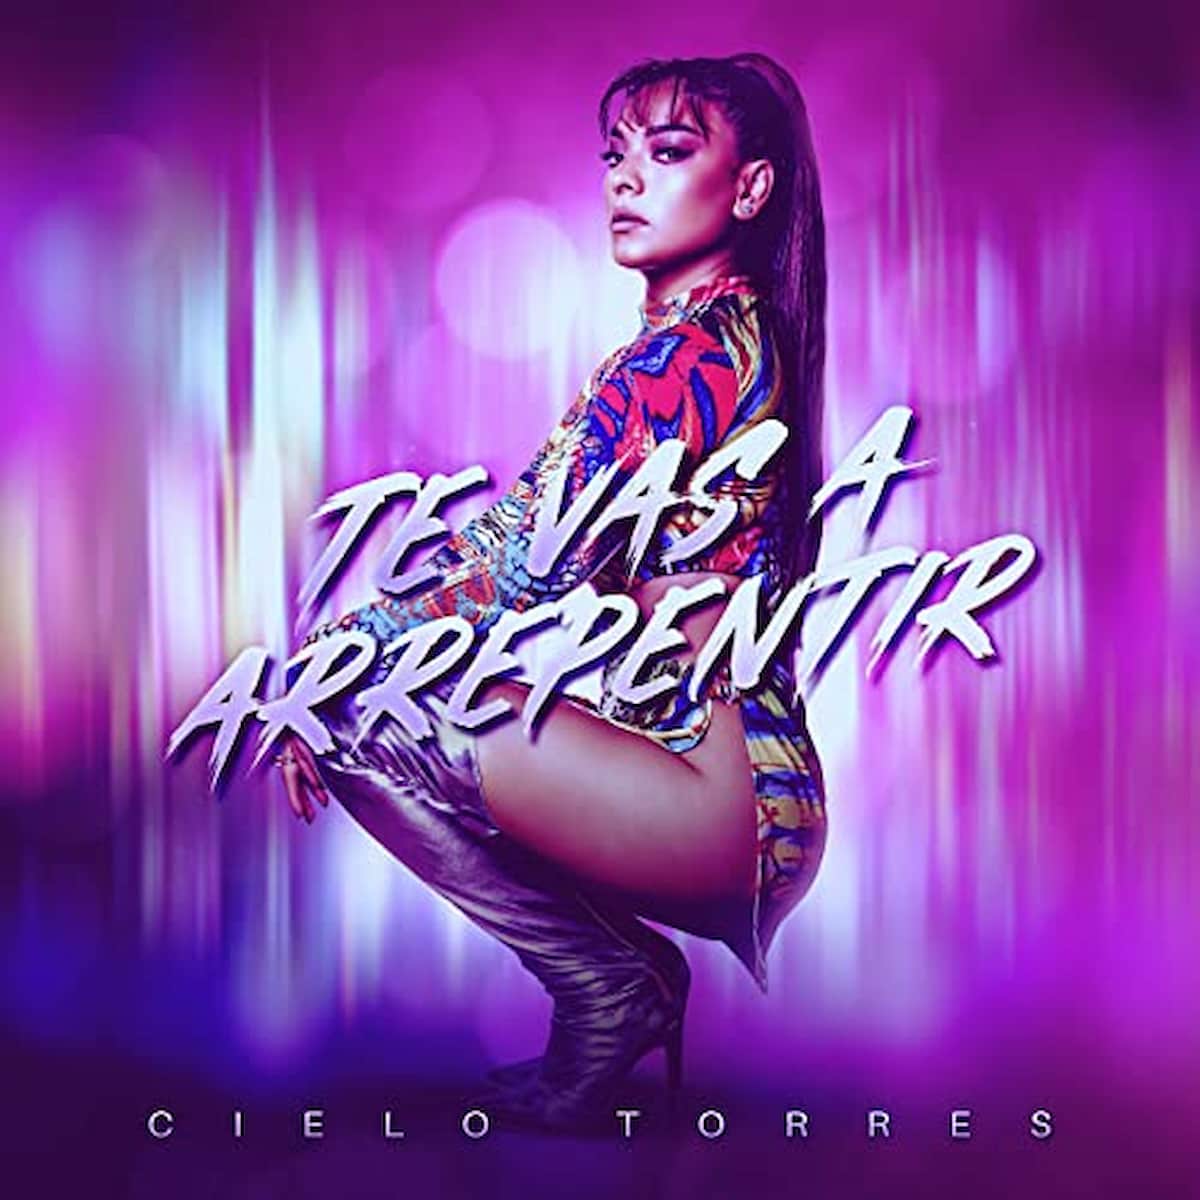 Cielo Torres aus Peru - hier das Cover zur Single Te Vas Arrepentir